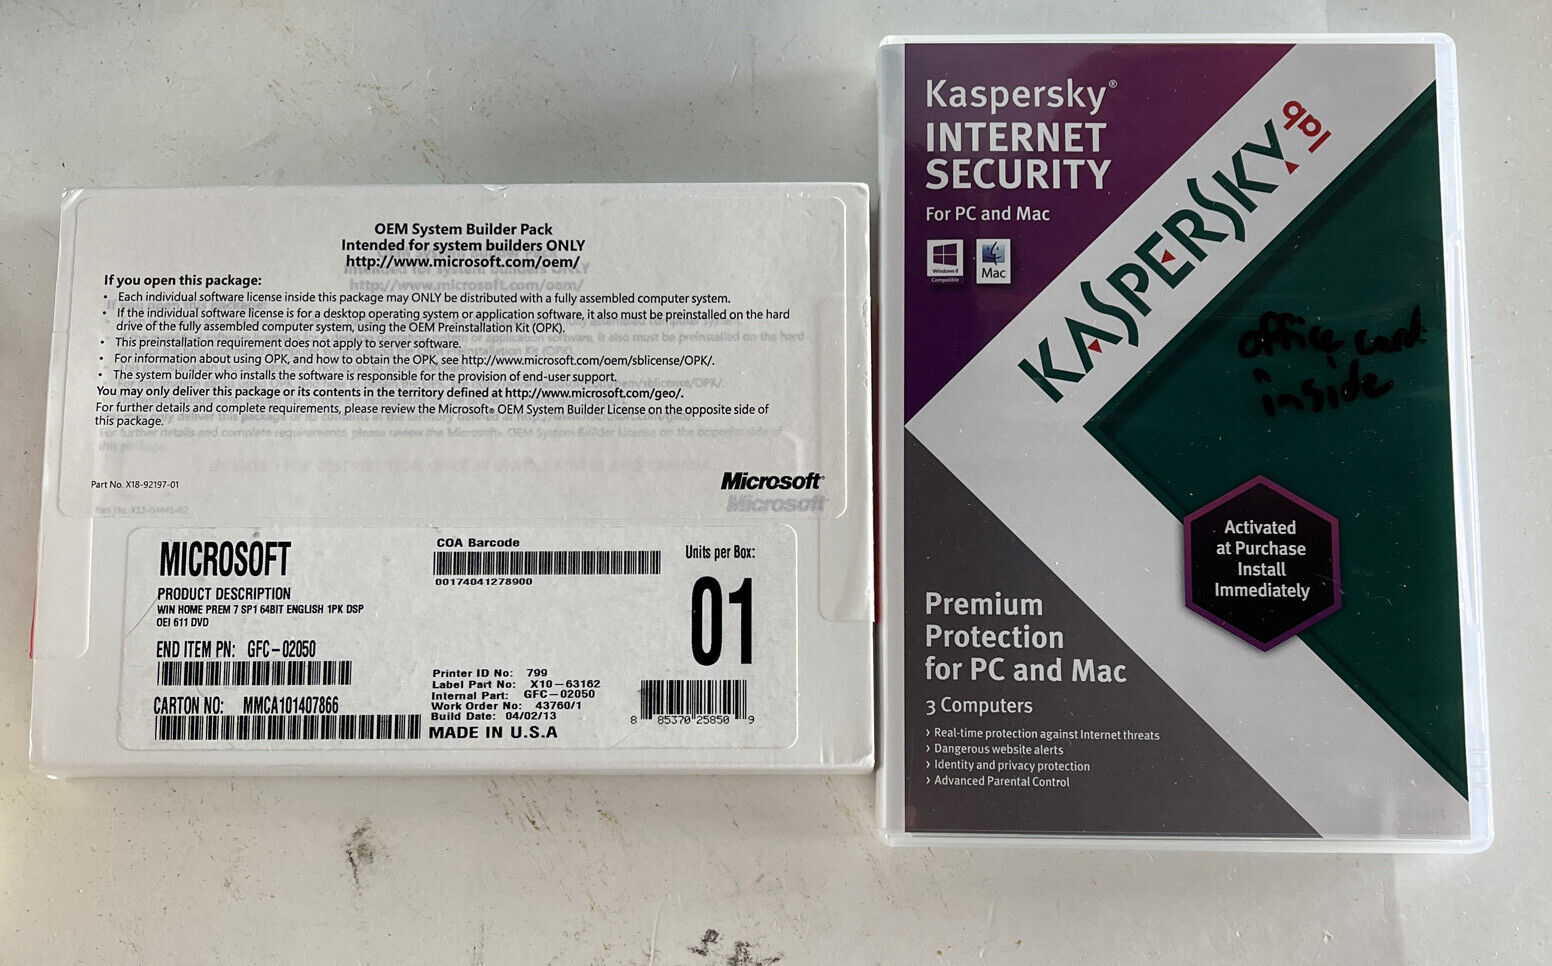 Microsoft Windows 7 Home Premium 64-Bit Software W/ Kaspersky